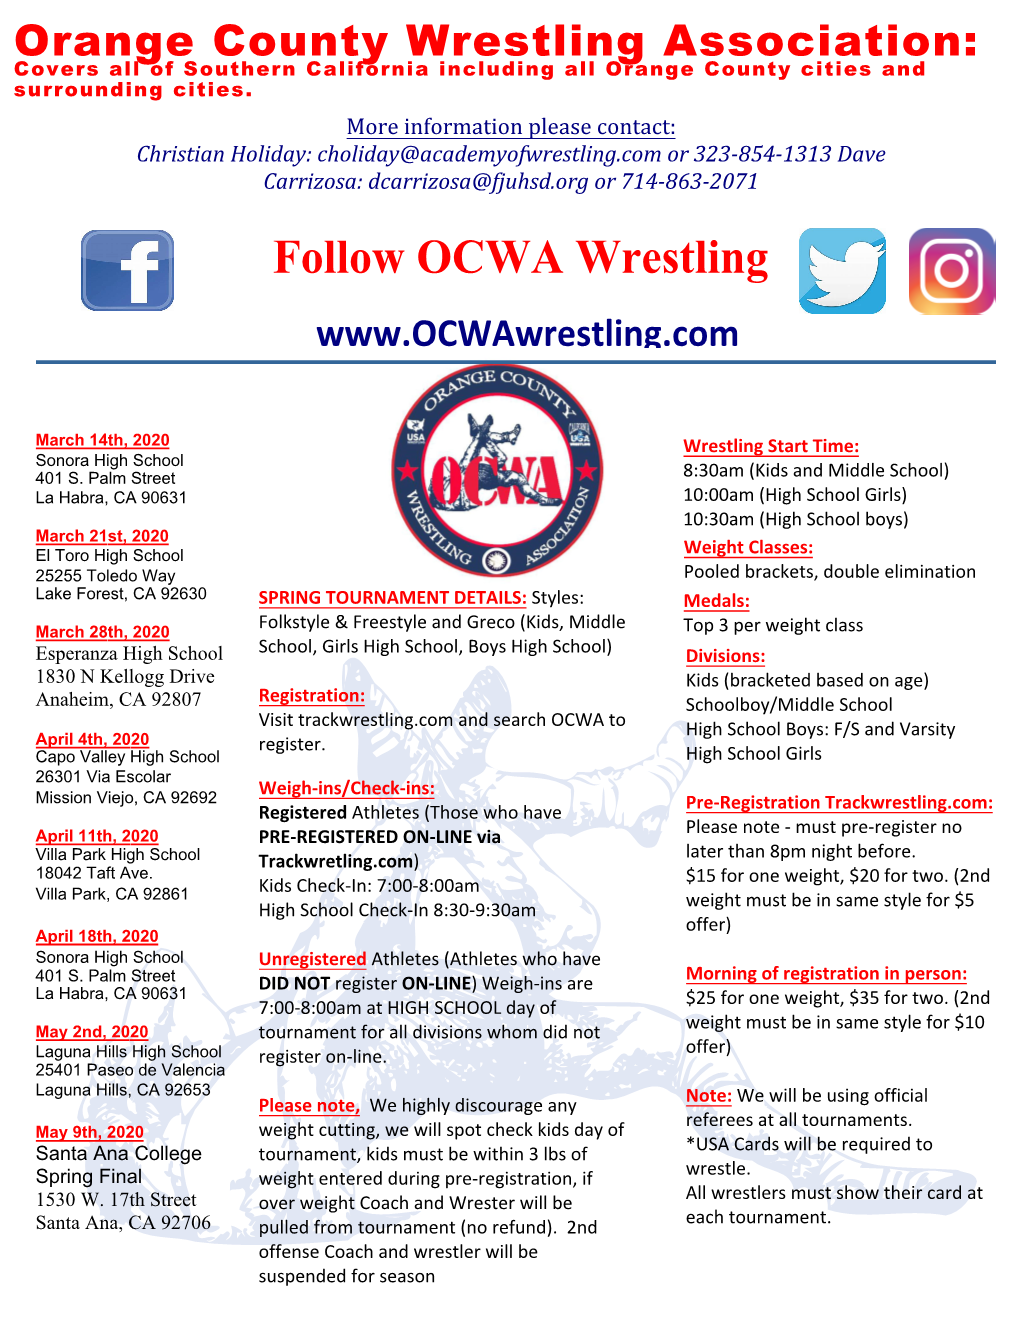 Follow OCWA Wrestling